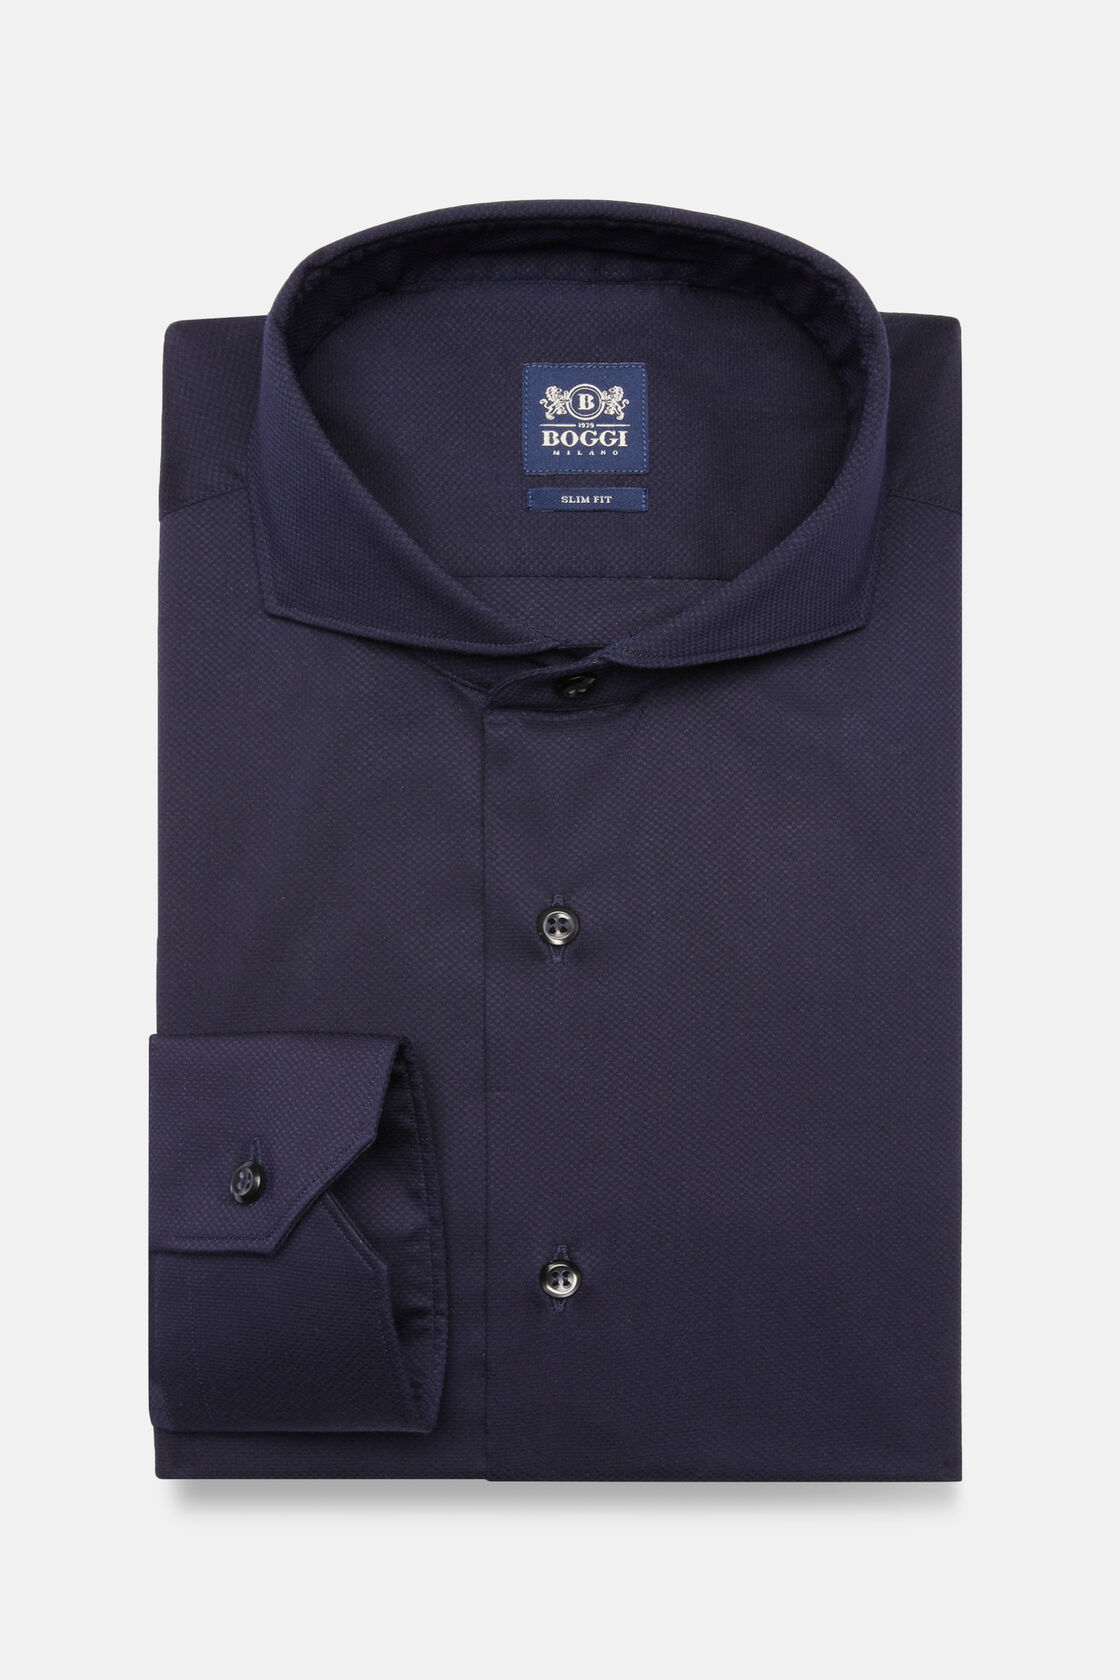 Navyblaues Hemd Aus Baumwoll-Nylon-Stretch Slim, Navy blau, hi-res